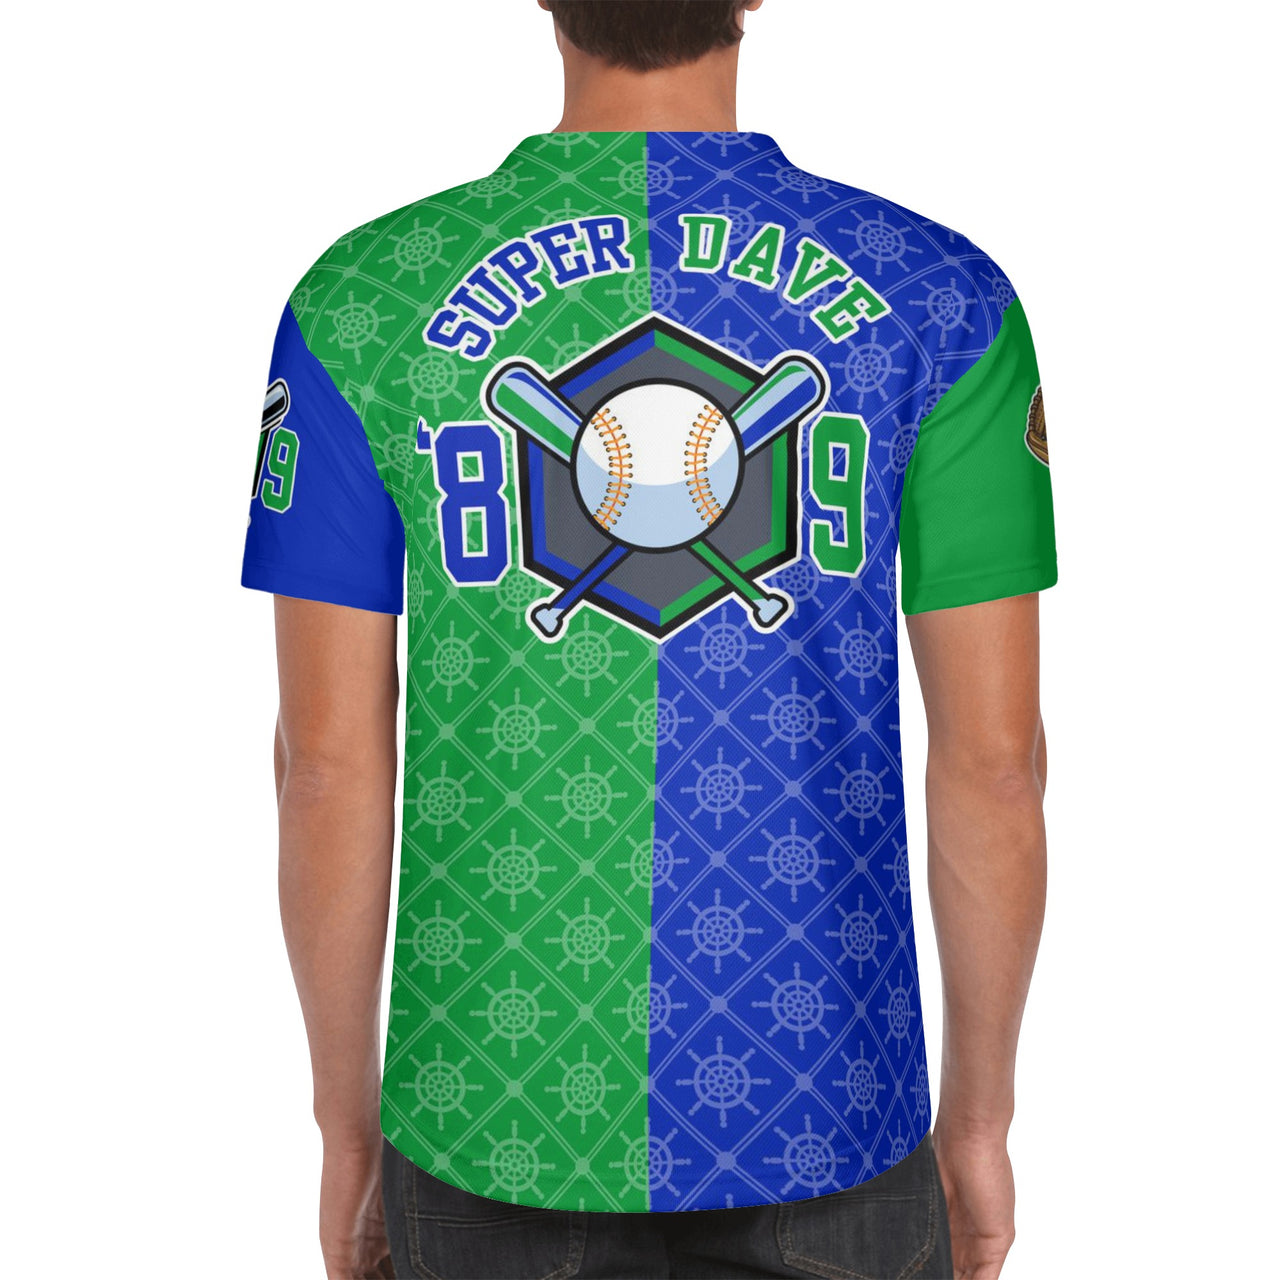 David South Shore Short Sleeve Baseball Jersey2